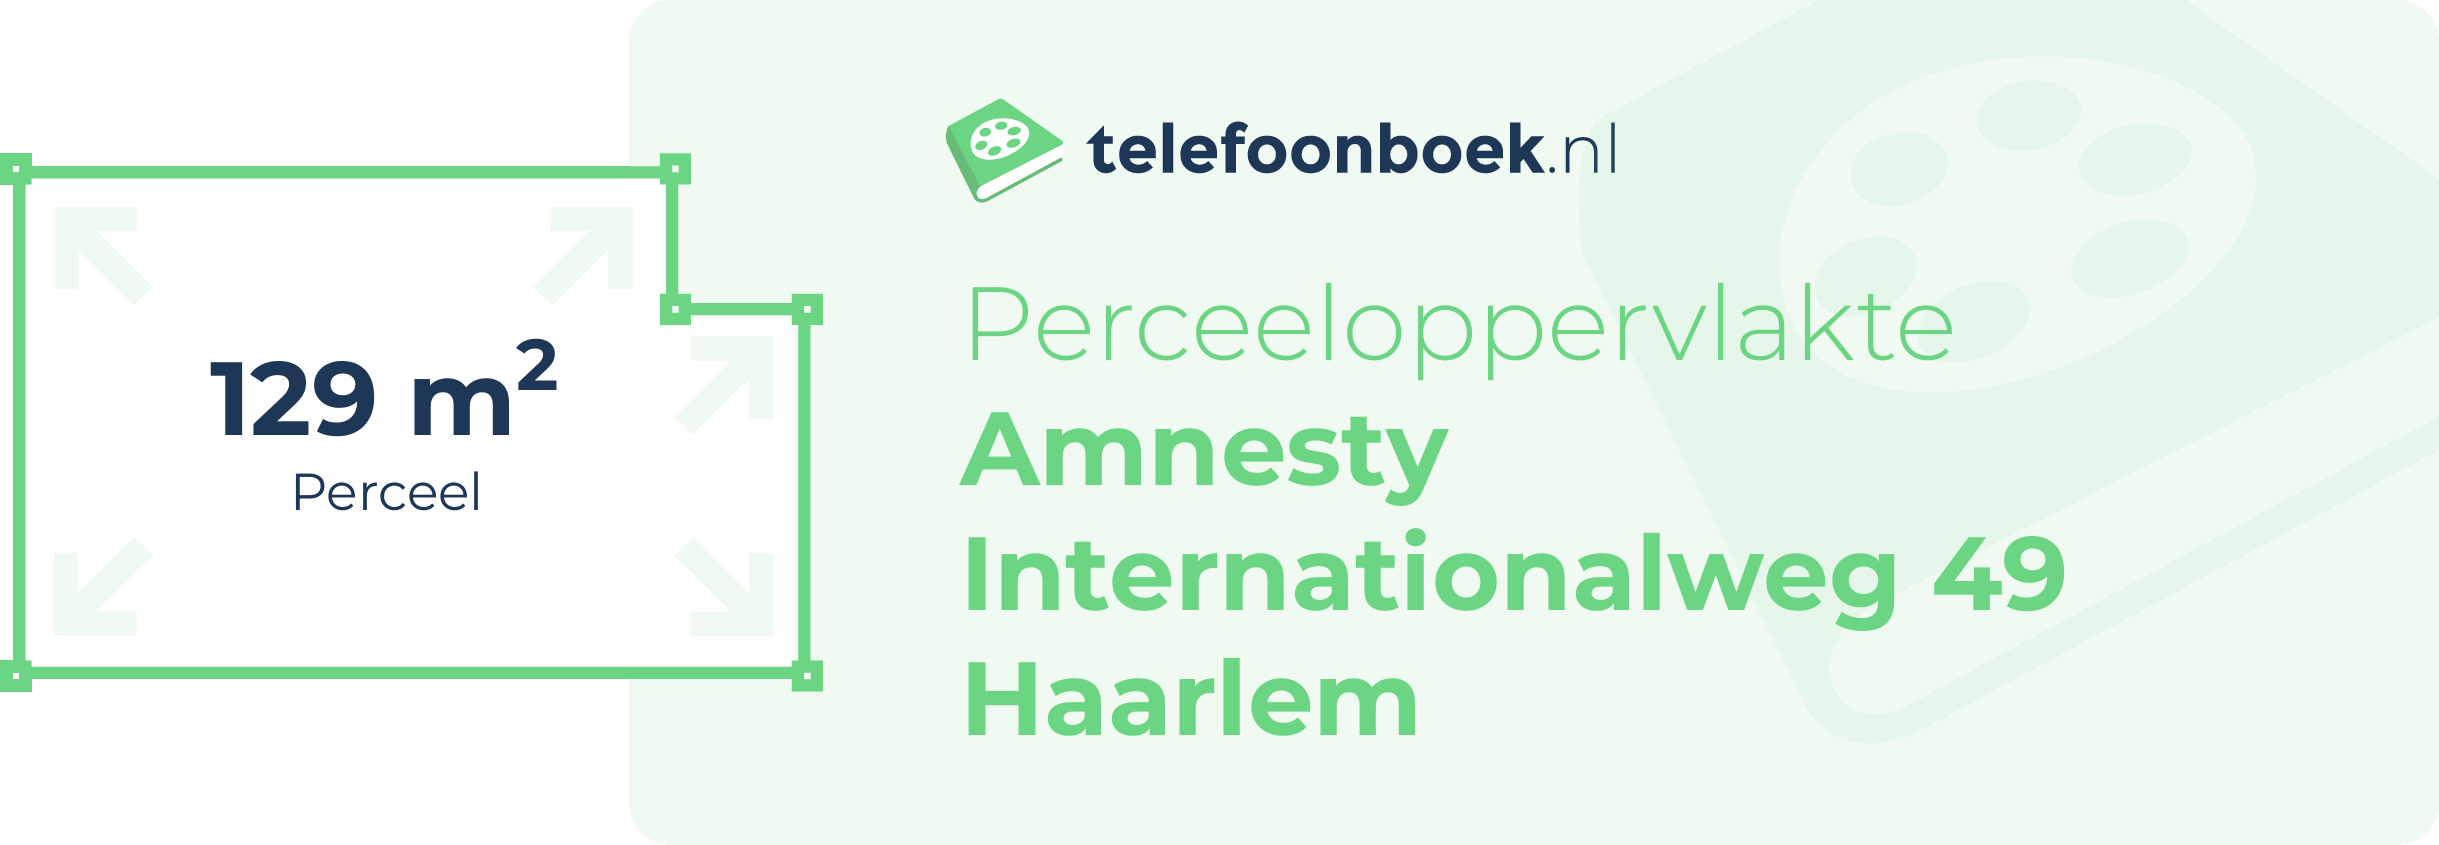 Perceeloppervlakte Amnesty Internationalweg 49 Haarlem